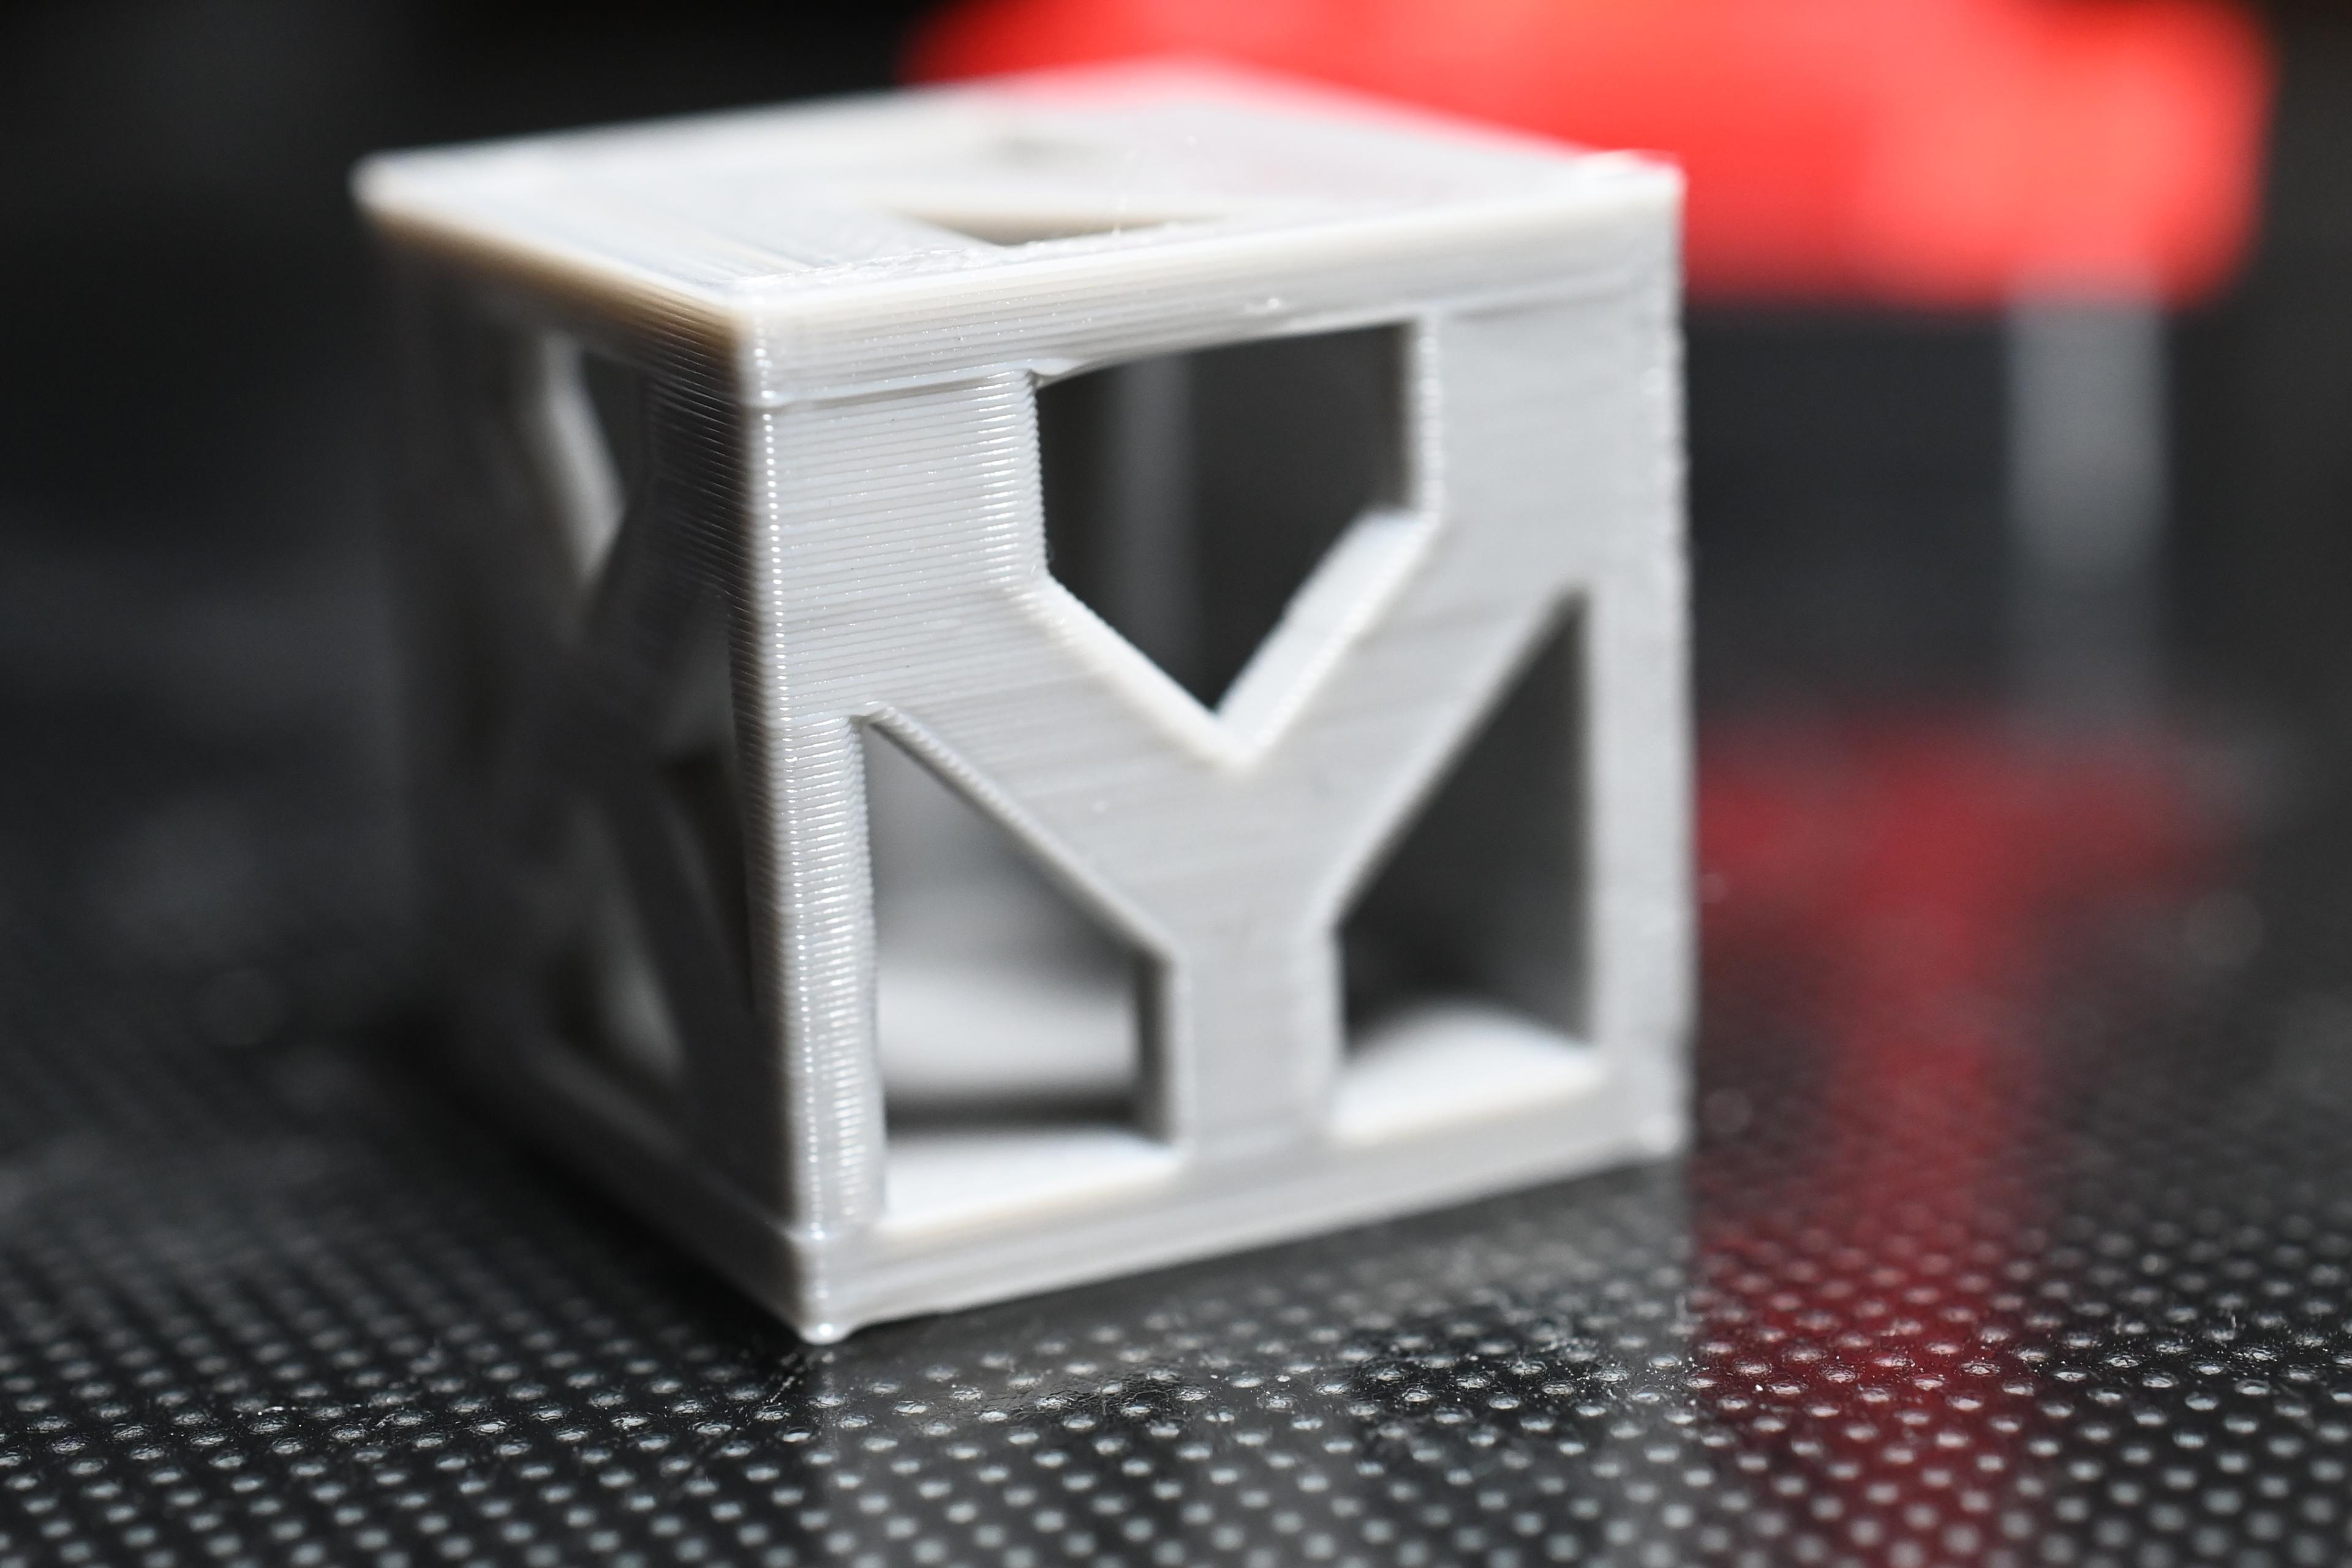 louis vuitton calibration cube - 3D model by pressprint on Thangs